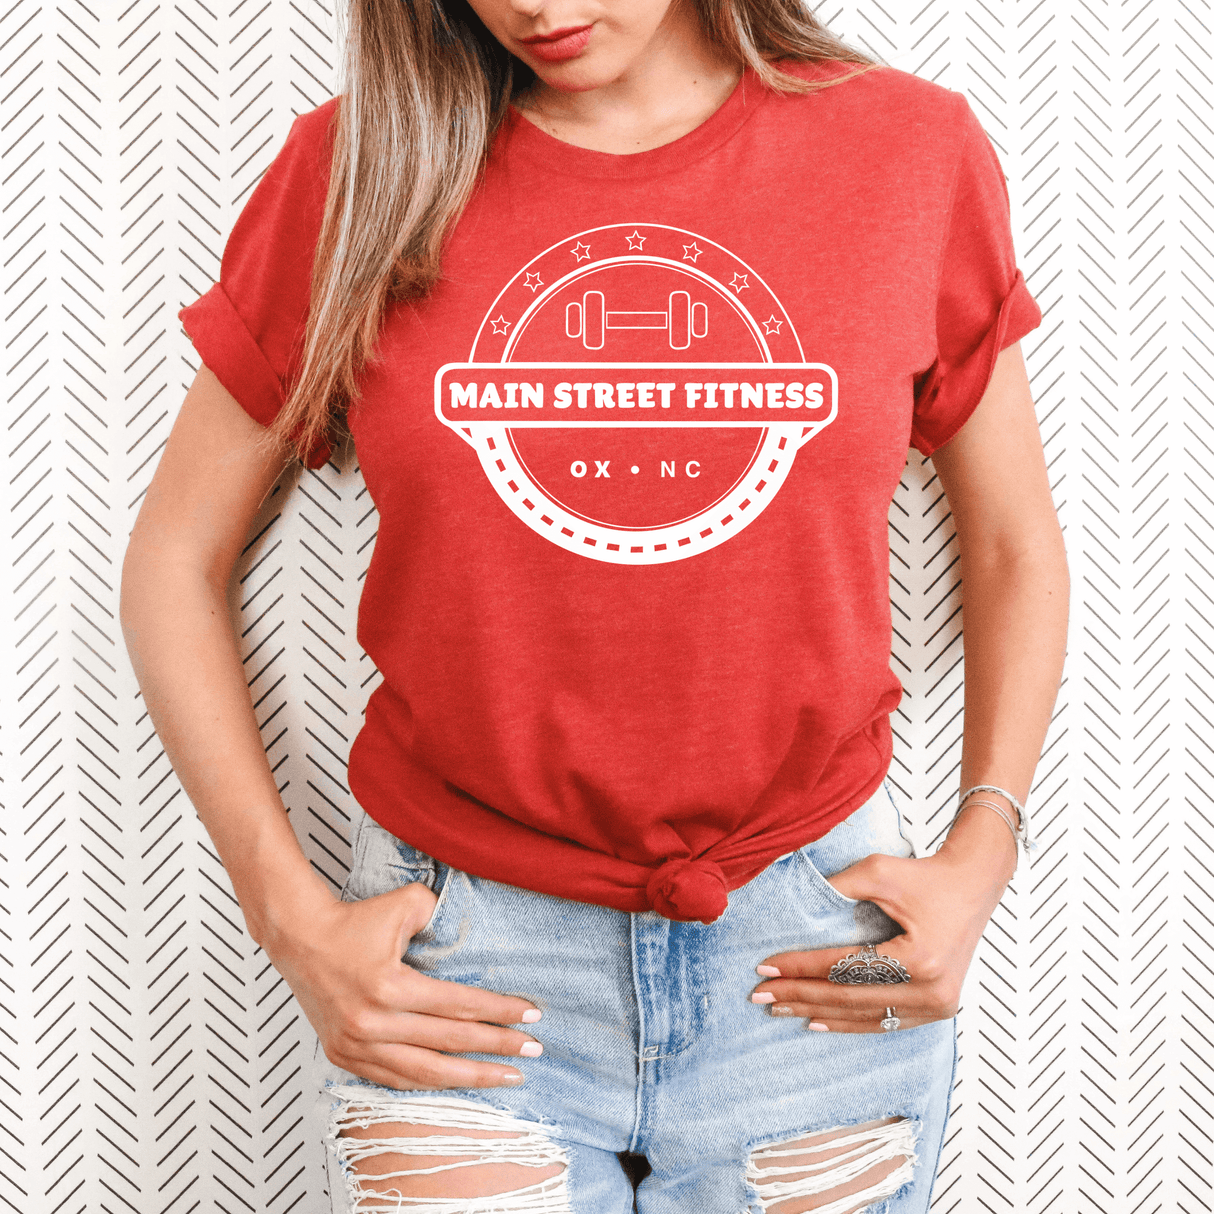 Main Street Fitness Short Sleeve T-shirt - Winks Design Studio,LLC